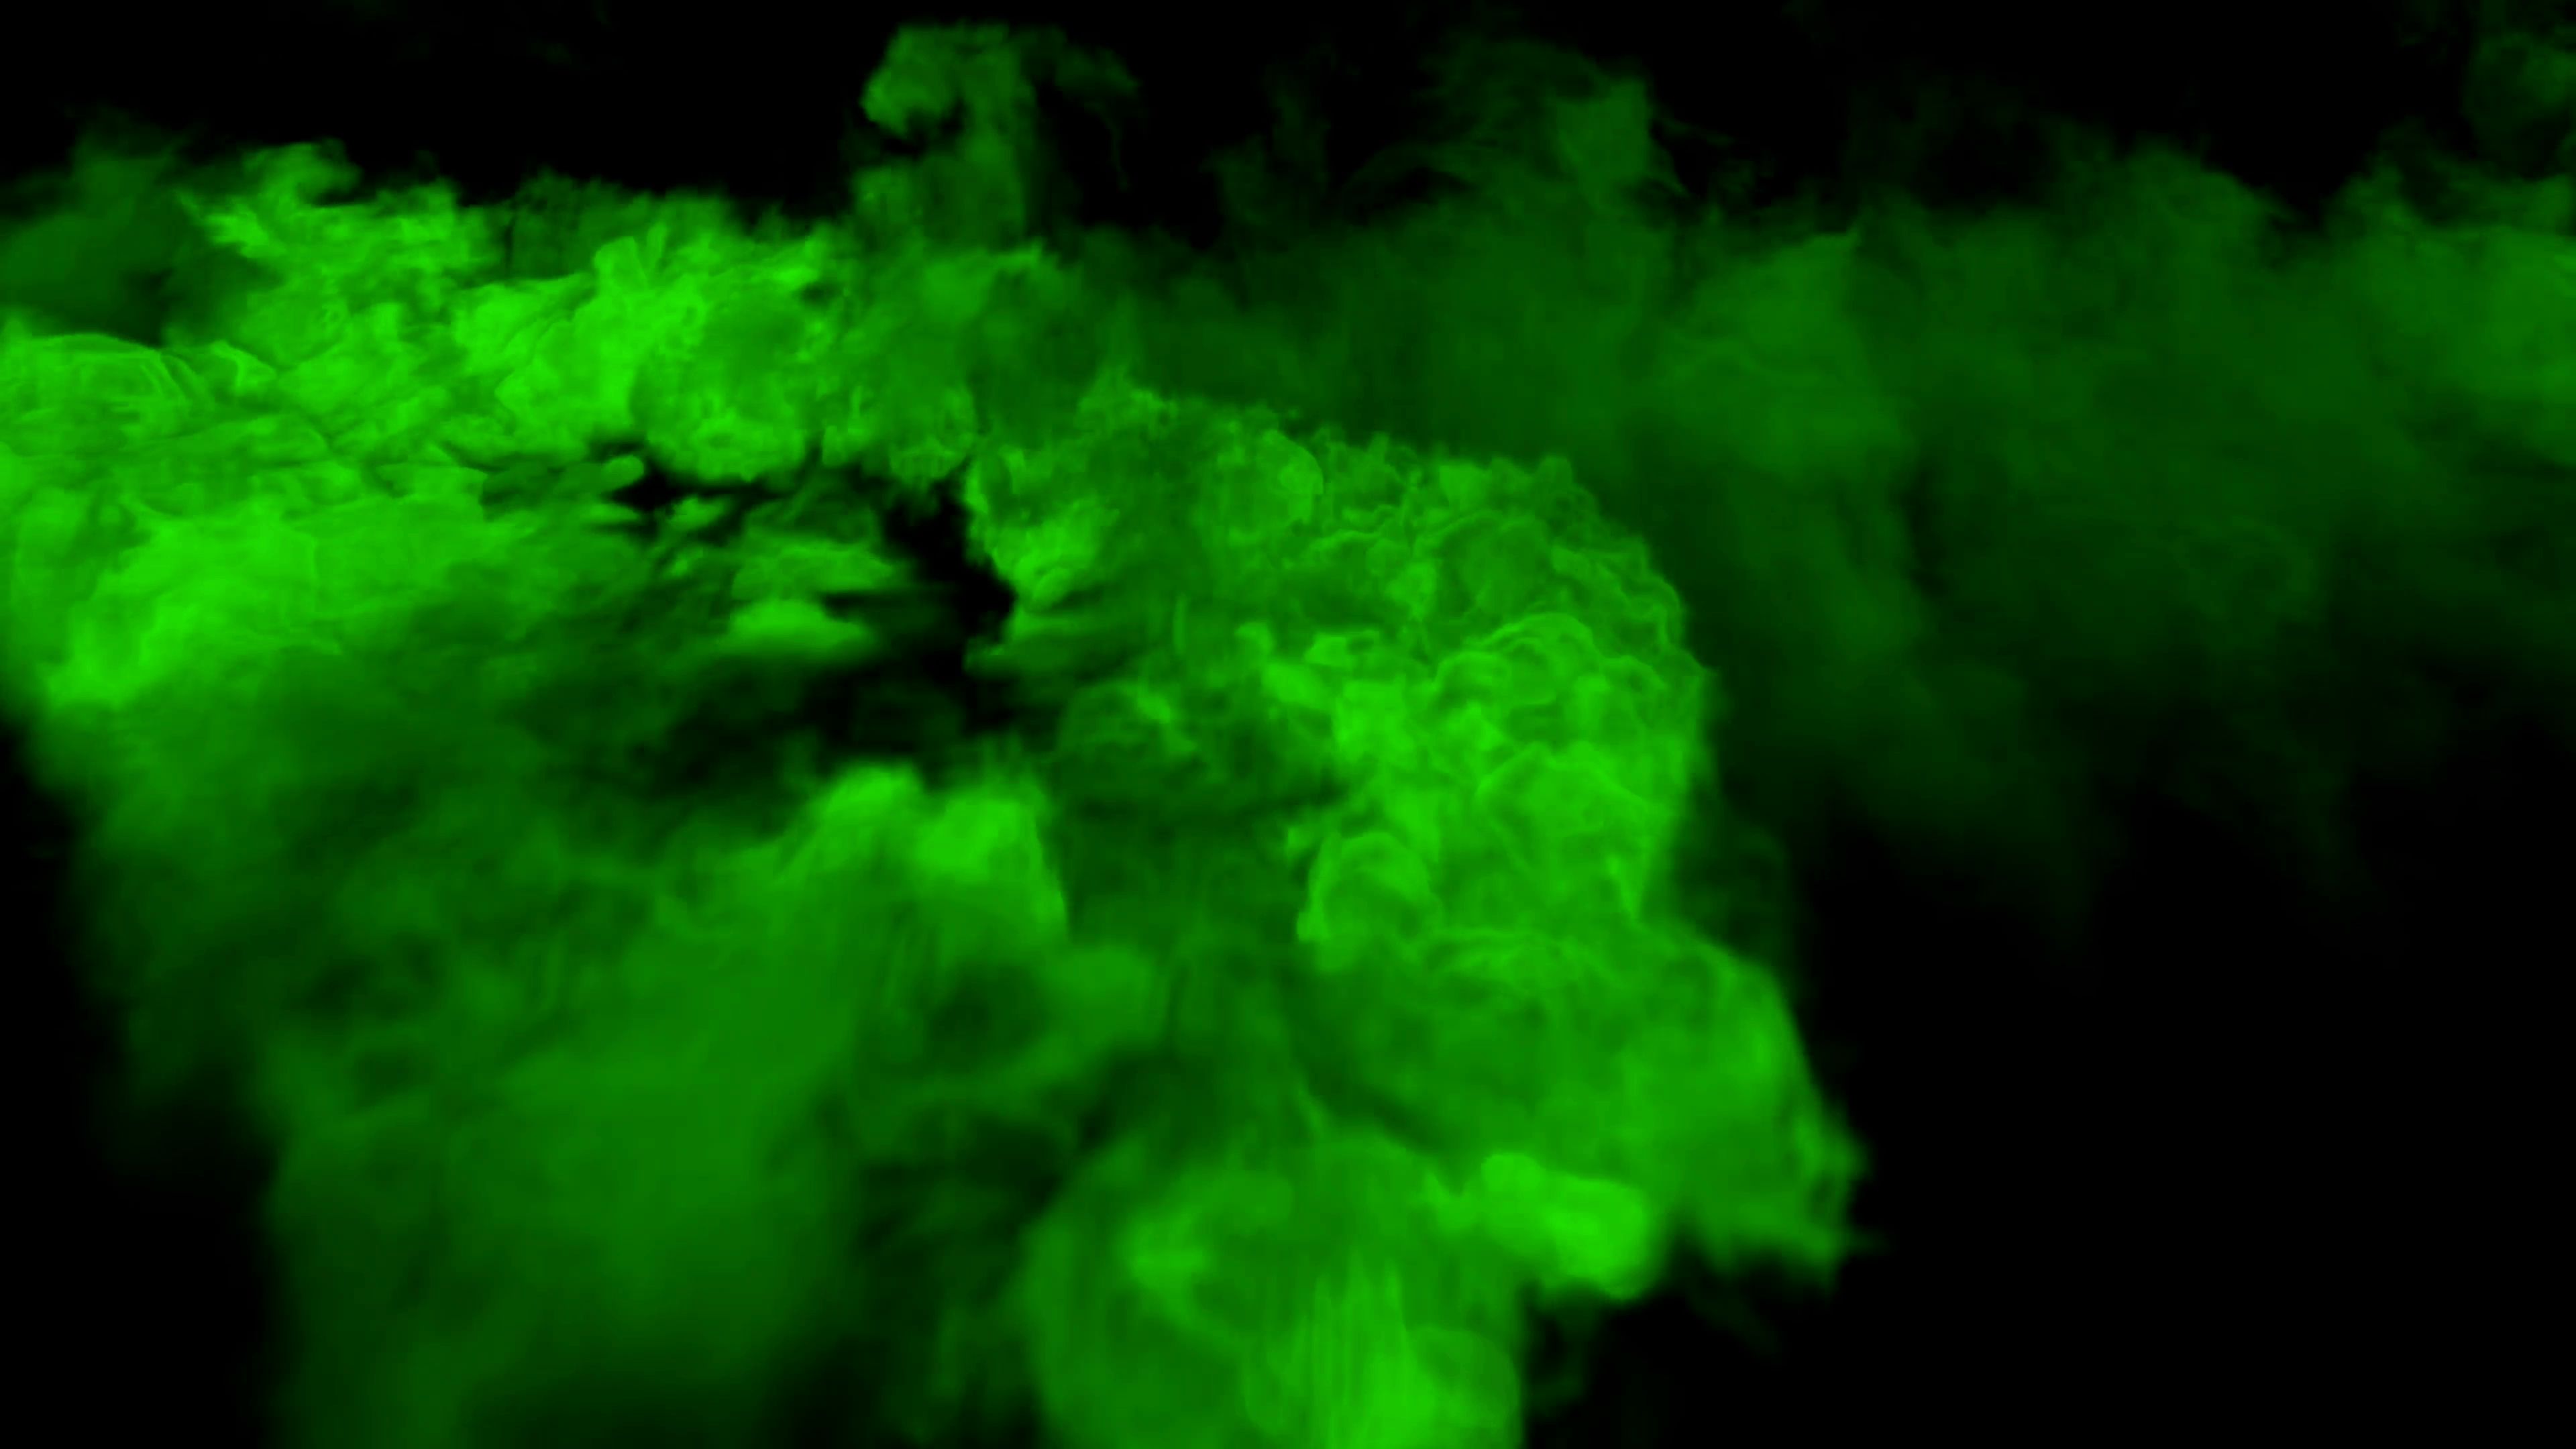 Animated stream, jet of green toxic smoke or gas bursting